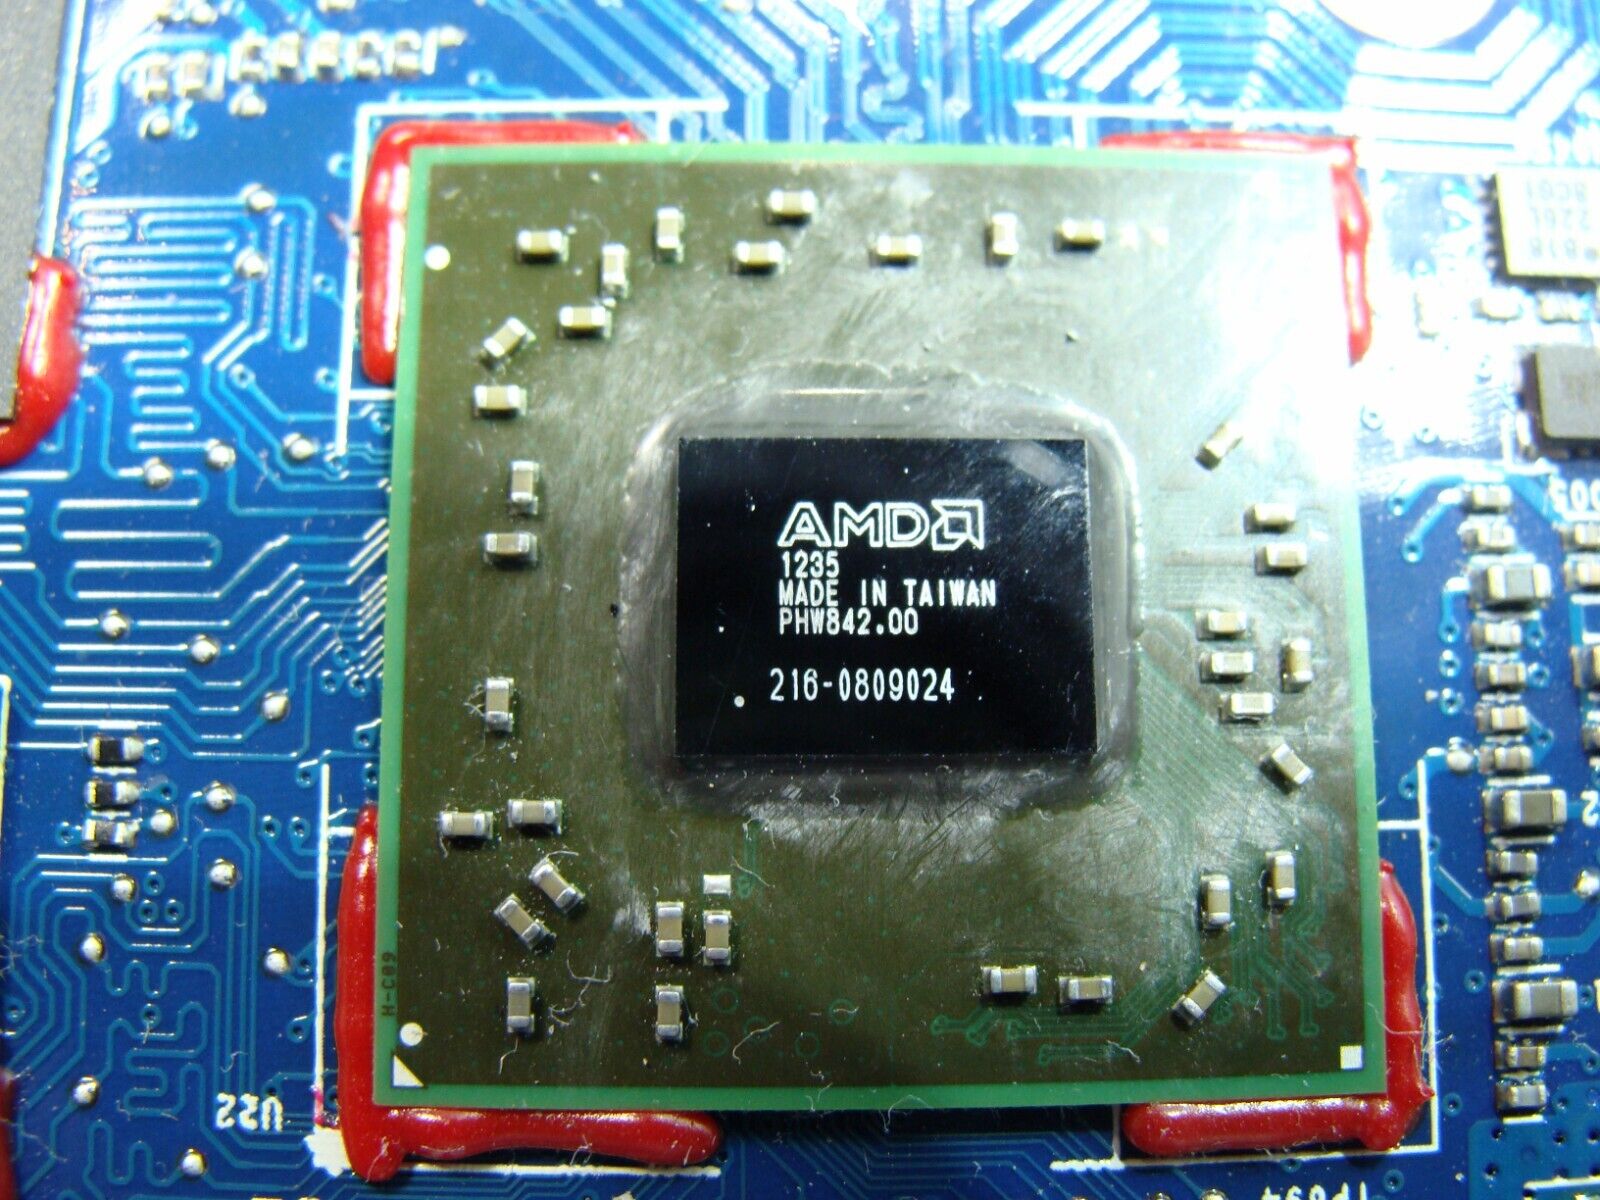 HP ProBook 17.3” 4730s Genuine Laptop Intel Socket Motherboard 670795-001